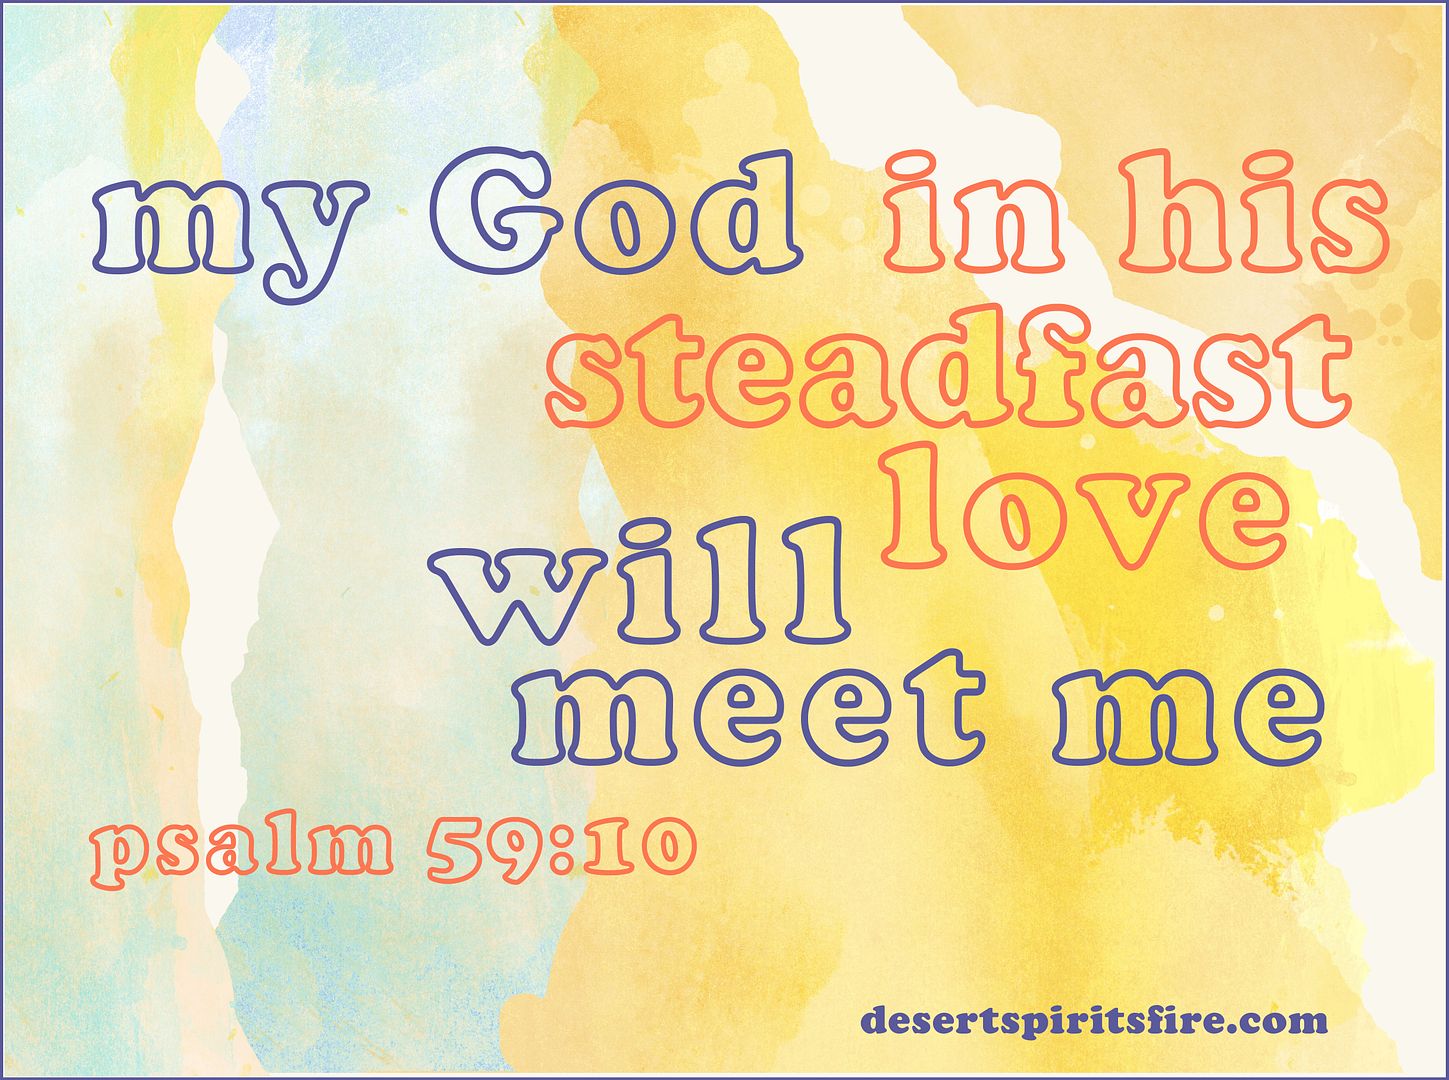 God in steadfast love will meet me, Psalm 59:10